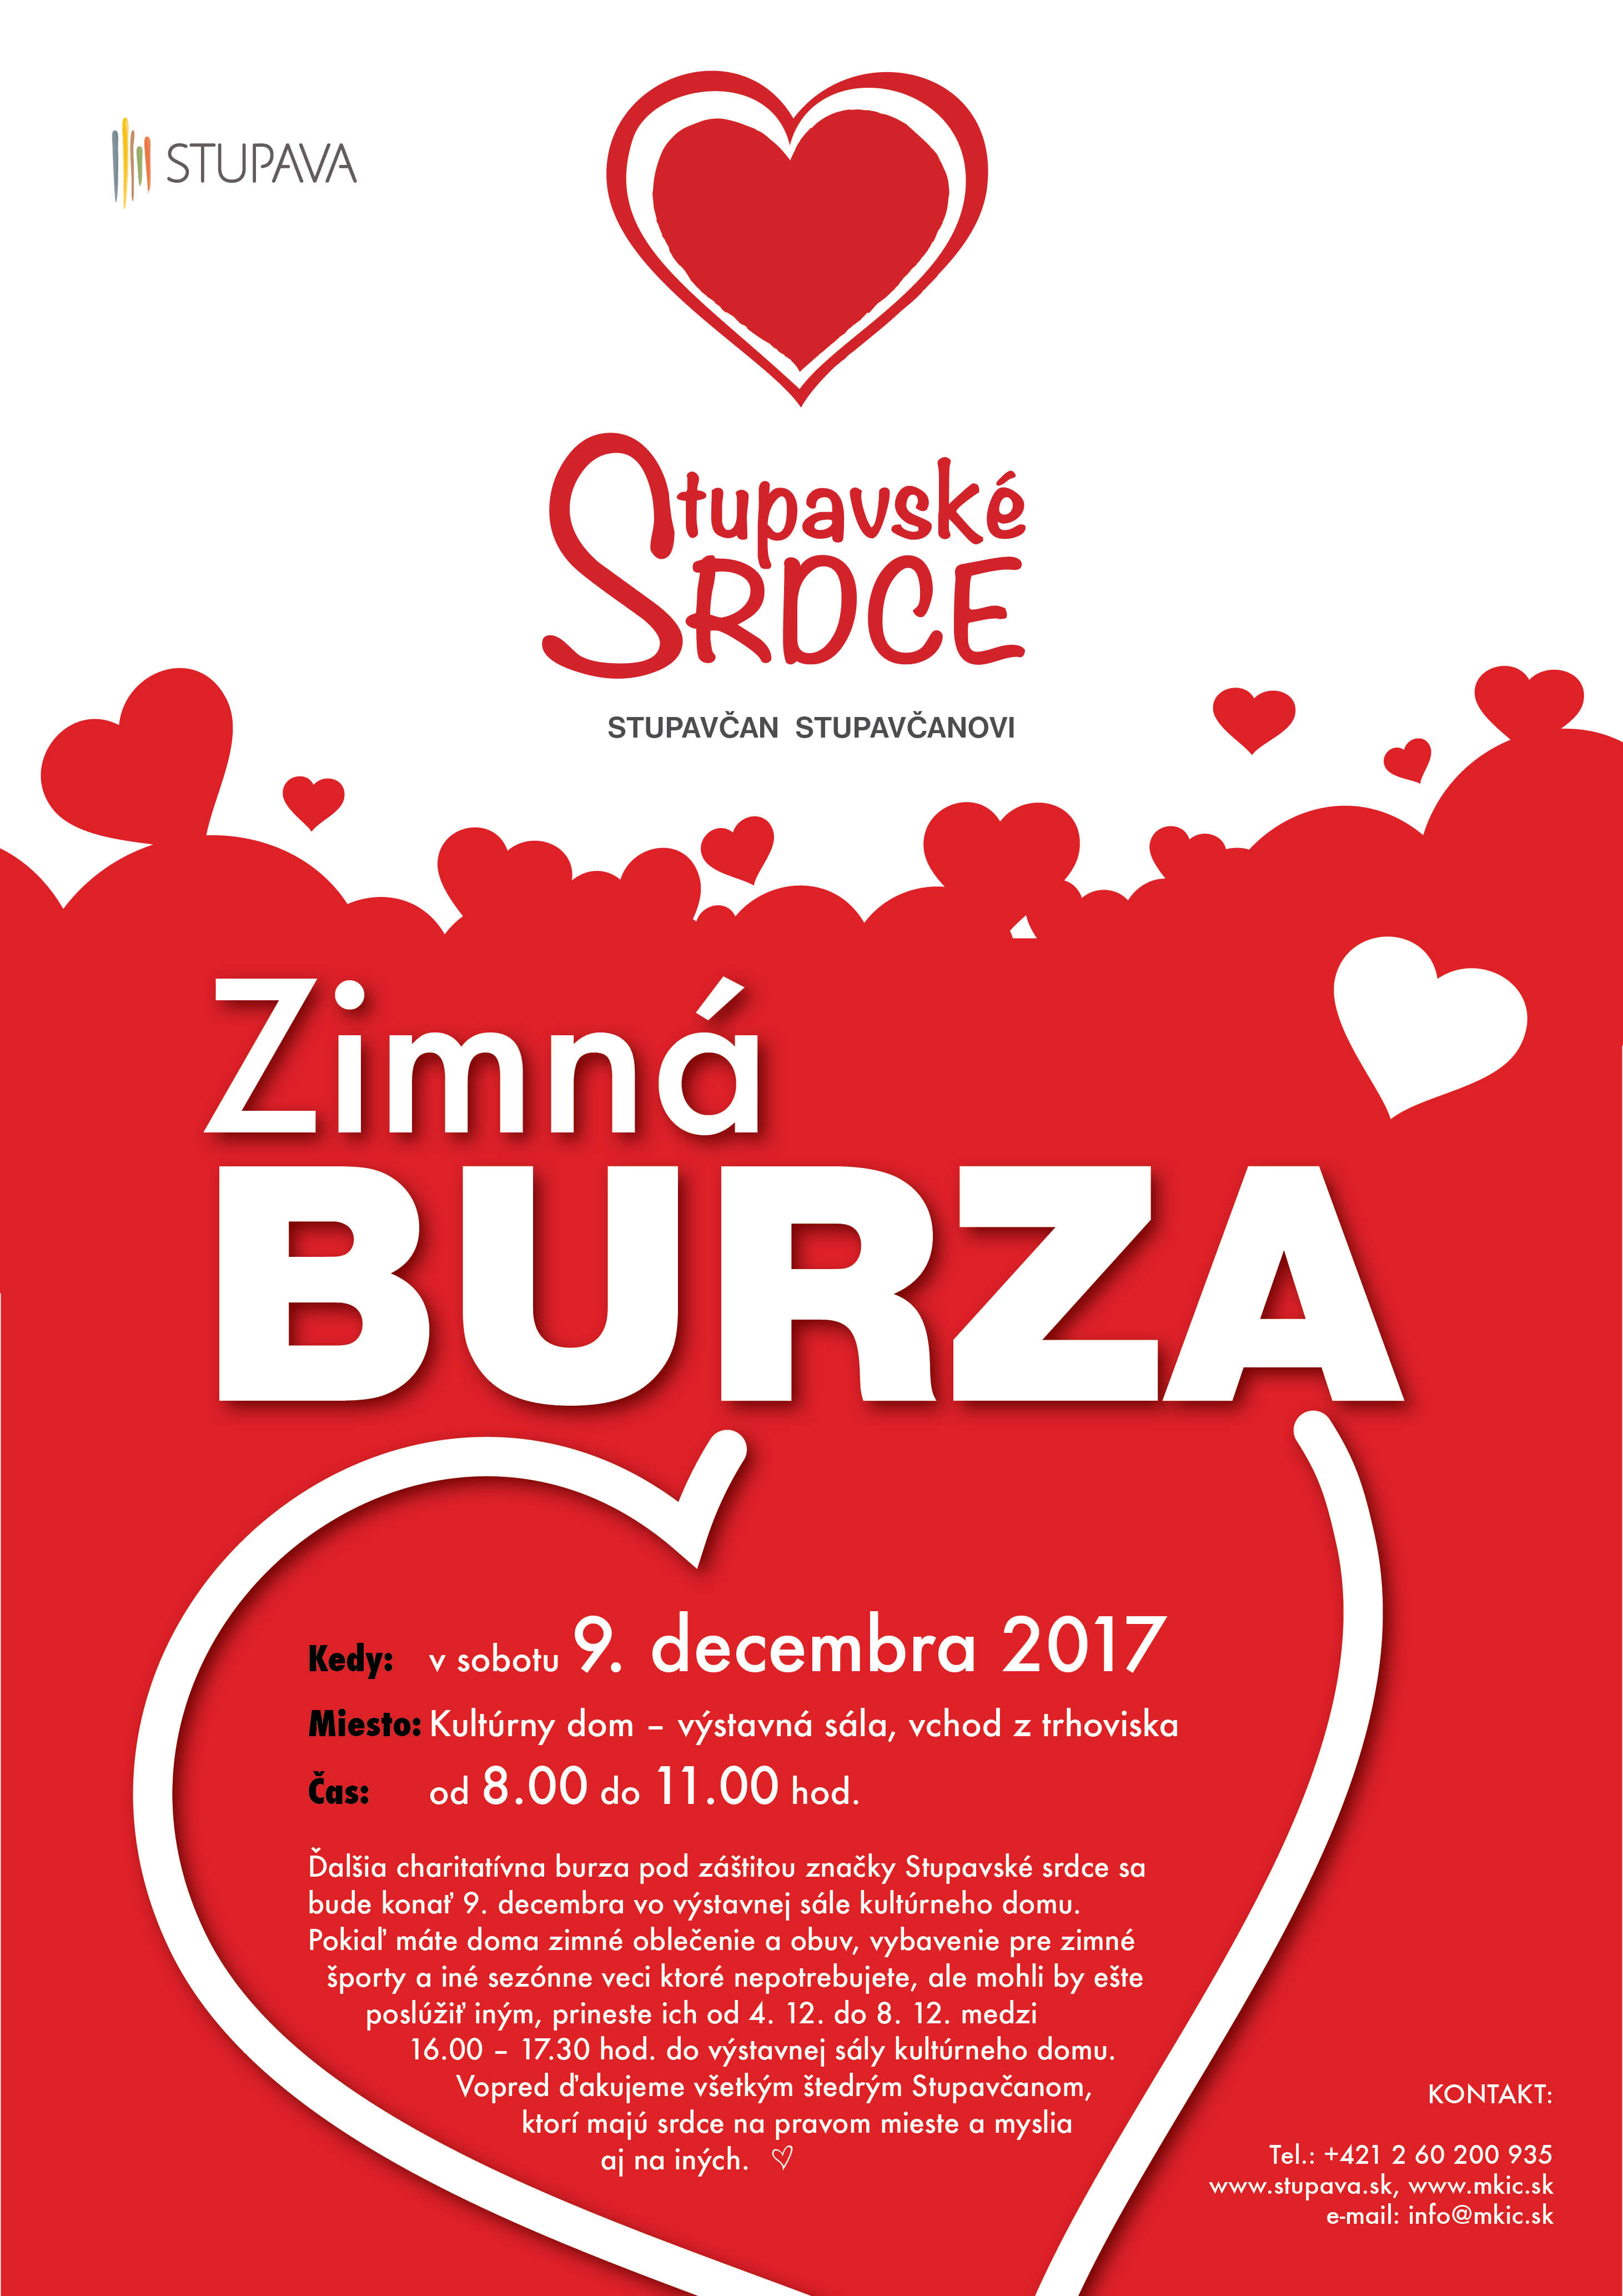 Stupavsk srdce 2017 - zimn charitatvna burza 